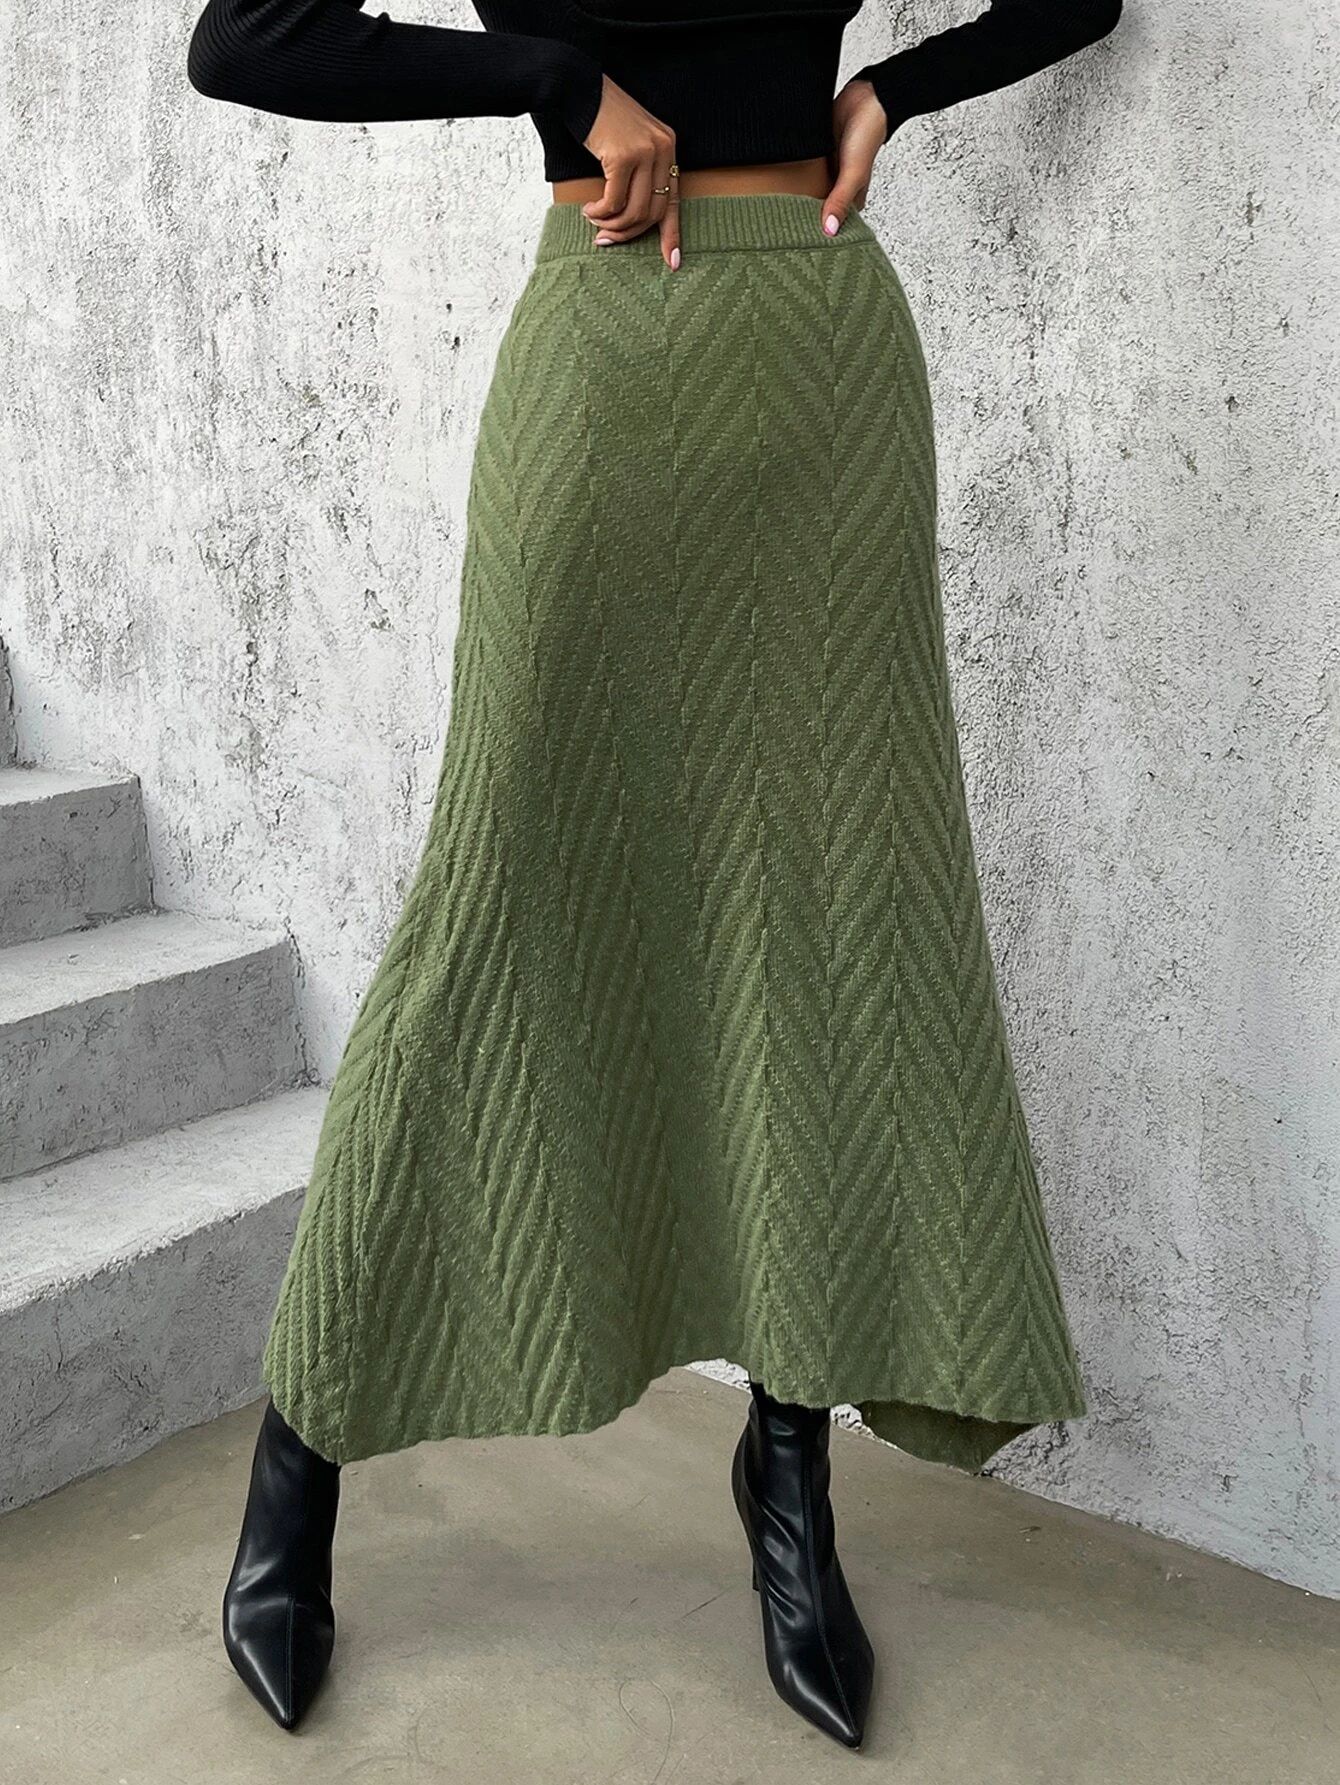 SHEIN Privé High Waist Textured Knit Skirt | SHEIN